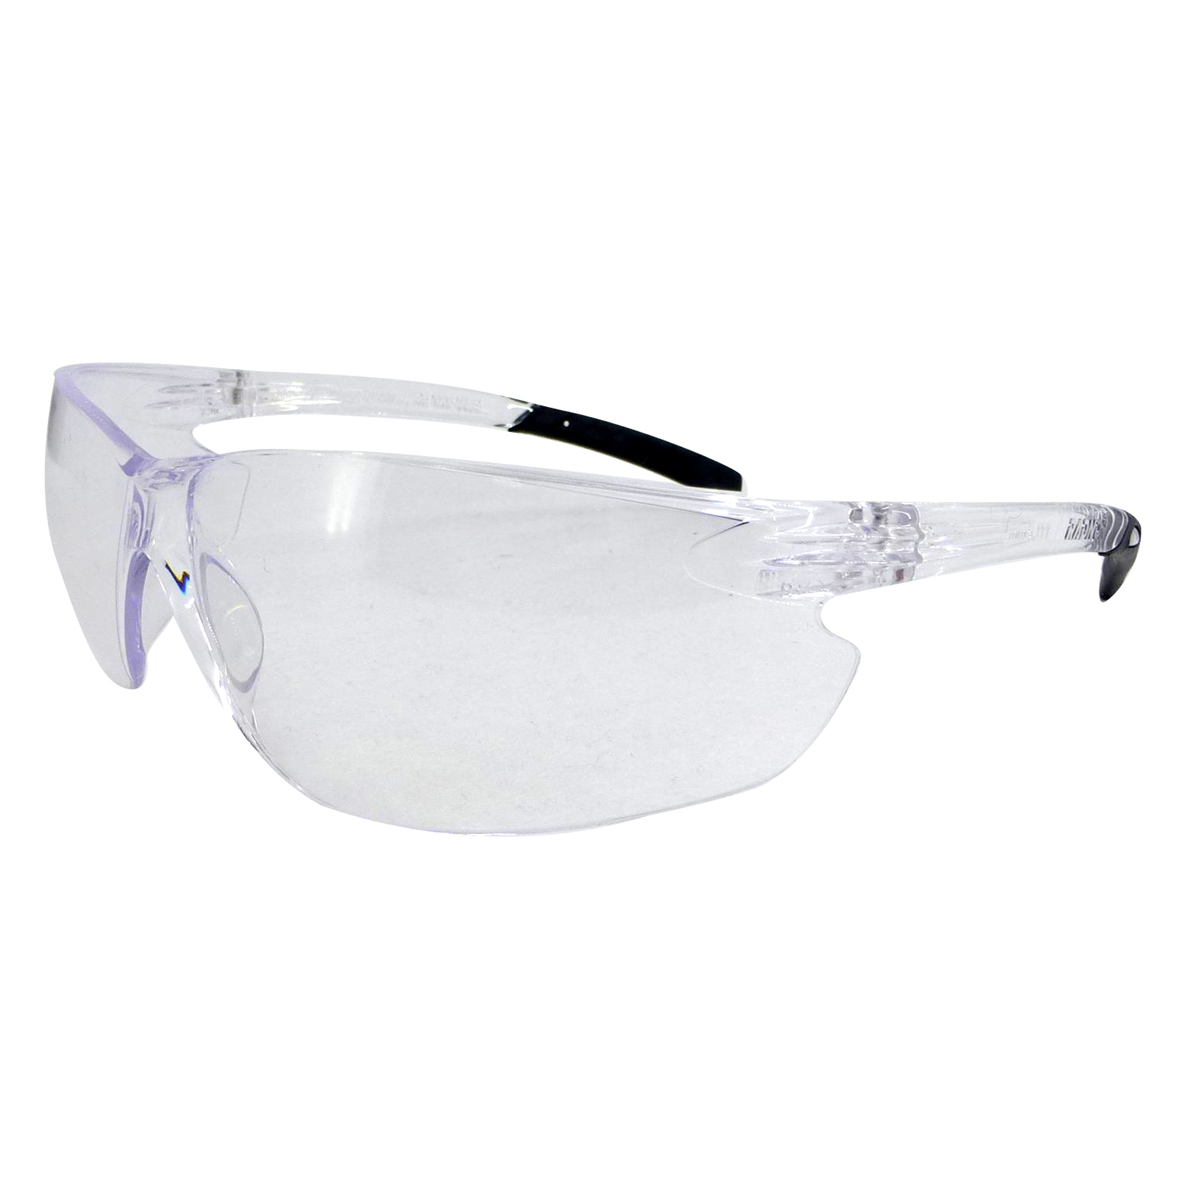 Safety Glasses - Impact Resistant Eyewear | Eye Protection 